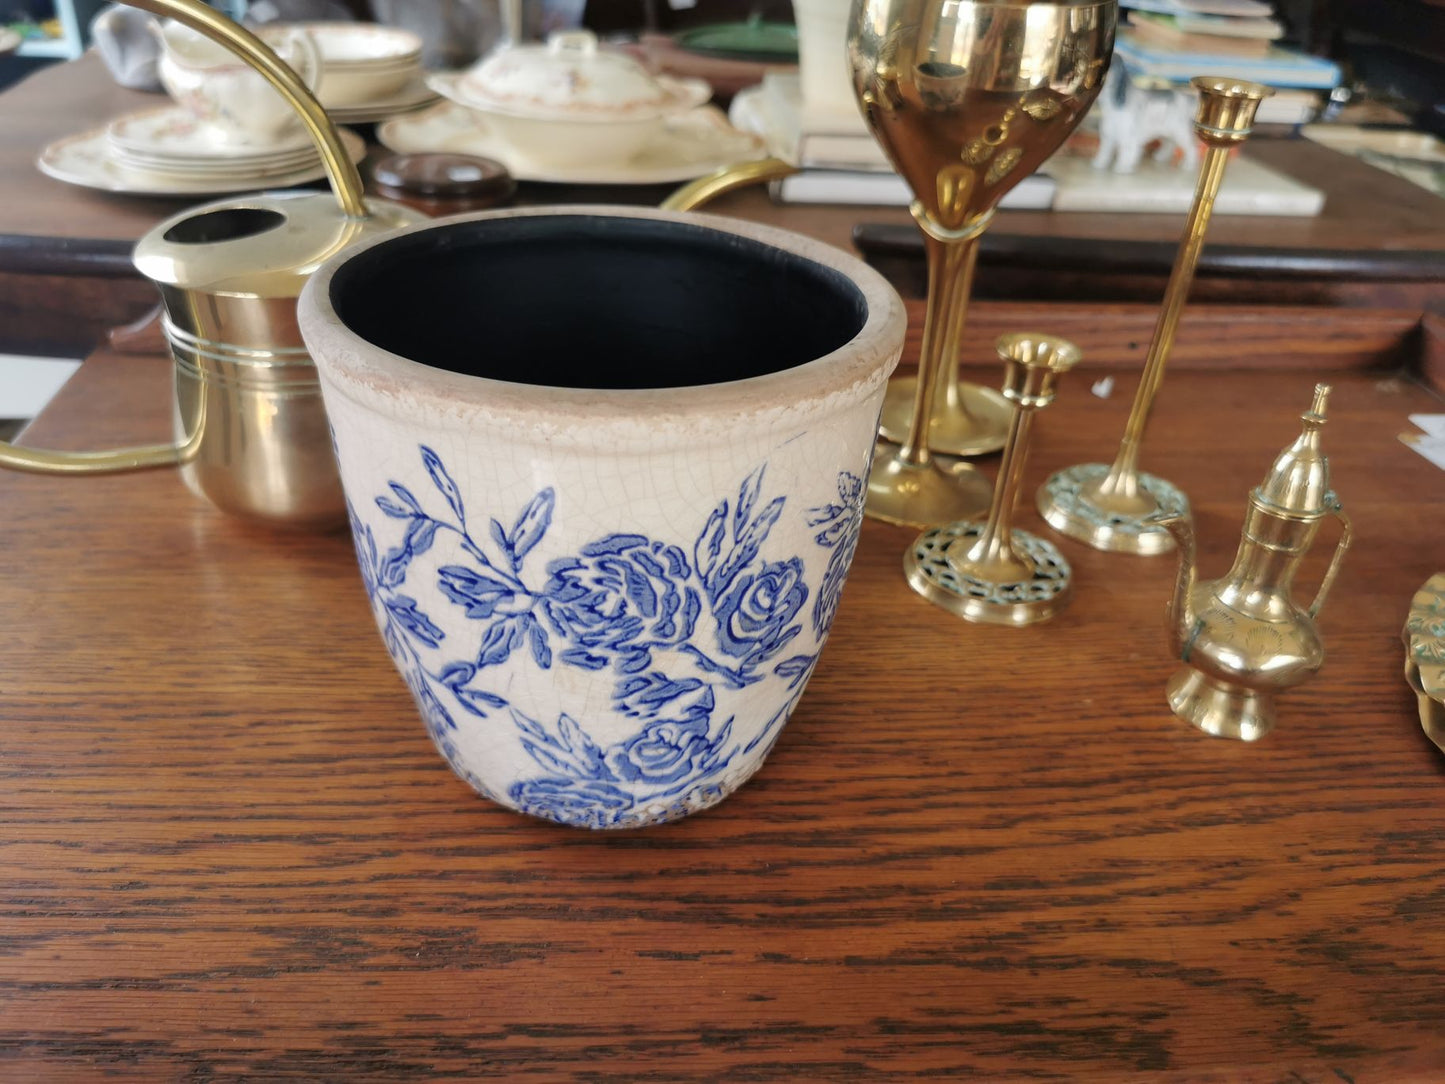 Ceramic plant pot - blue roses